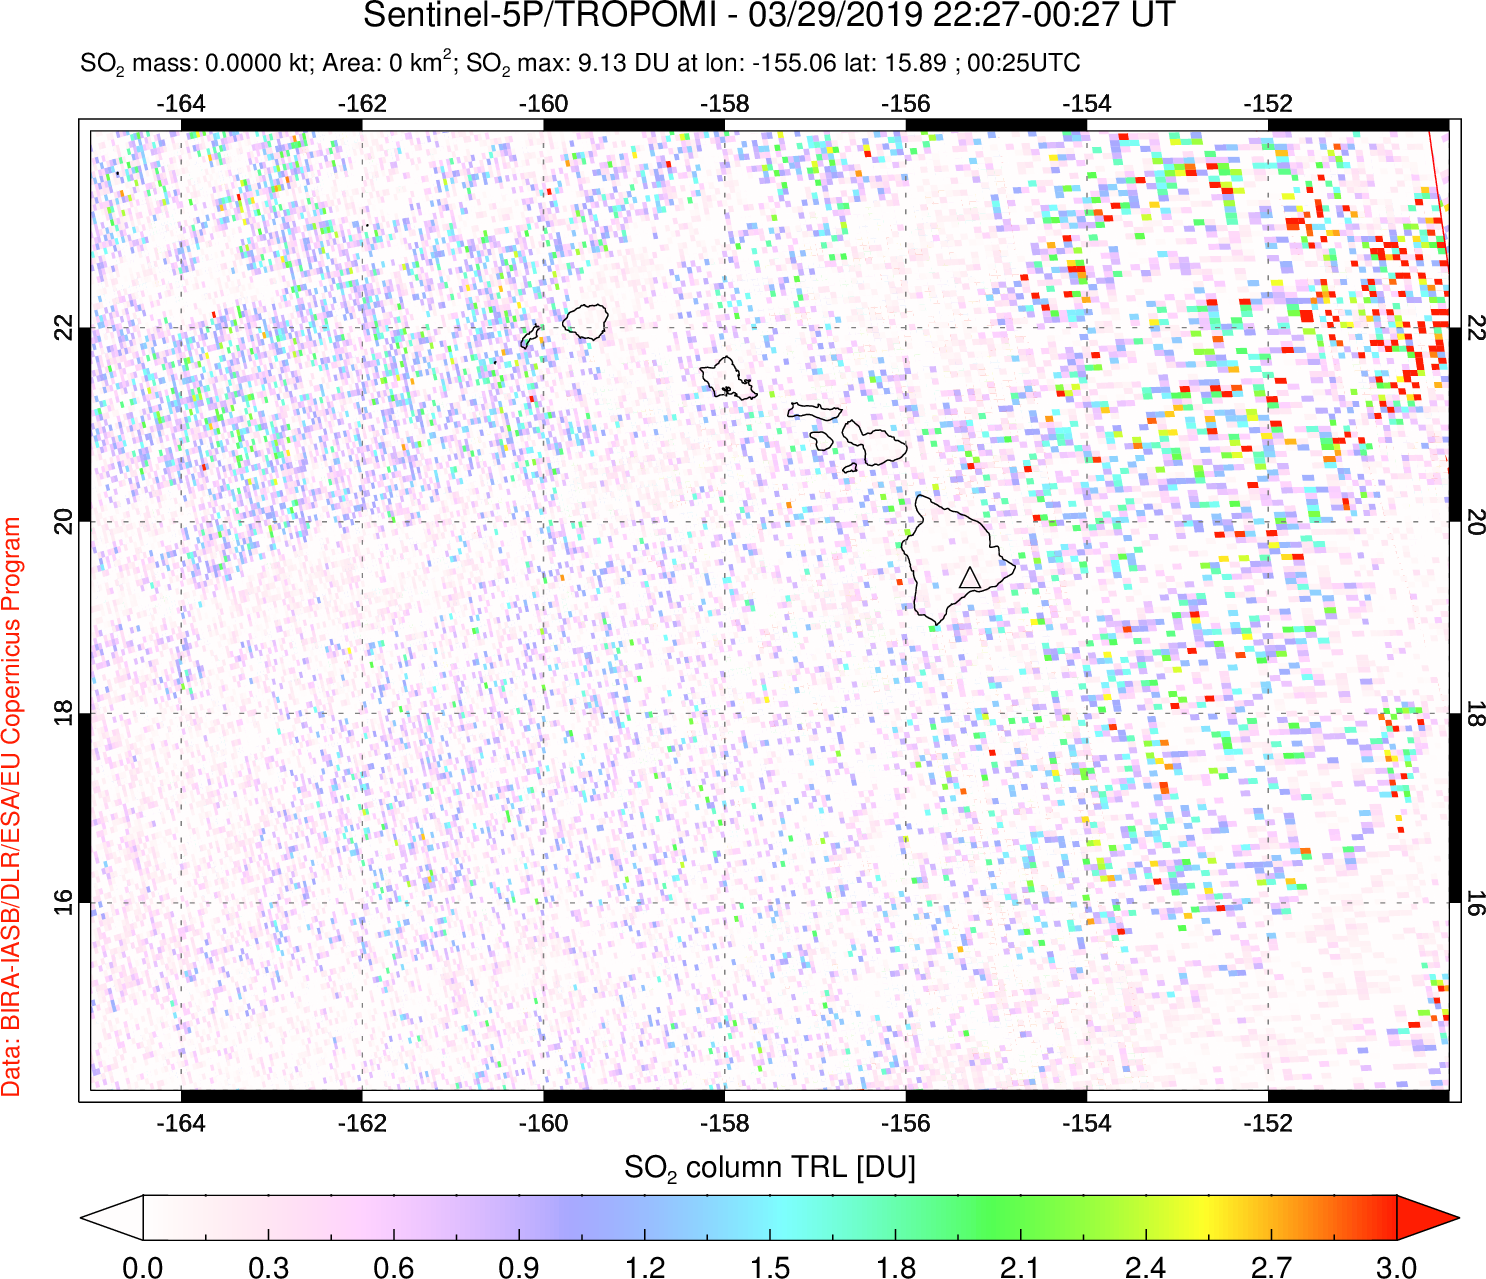 A sulfur dioxide image over Hawaii, USA on Mar 29, 2019.